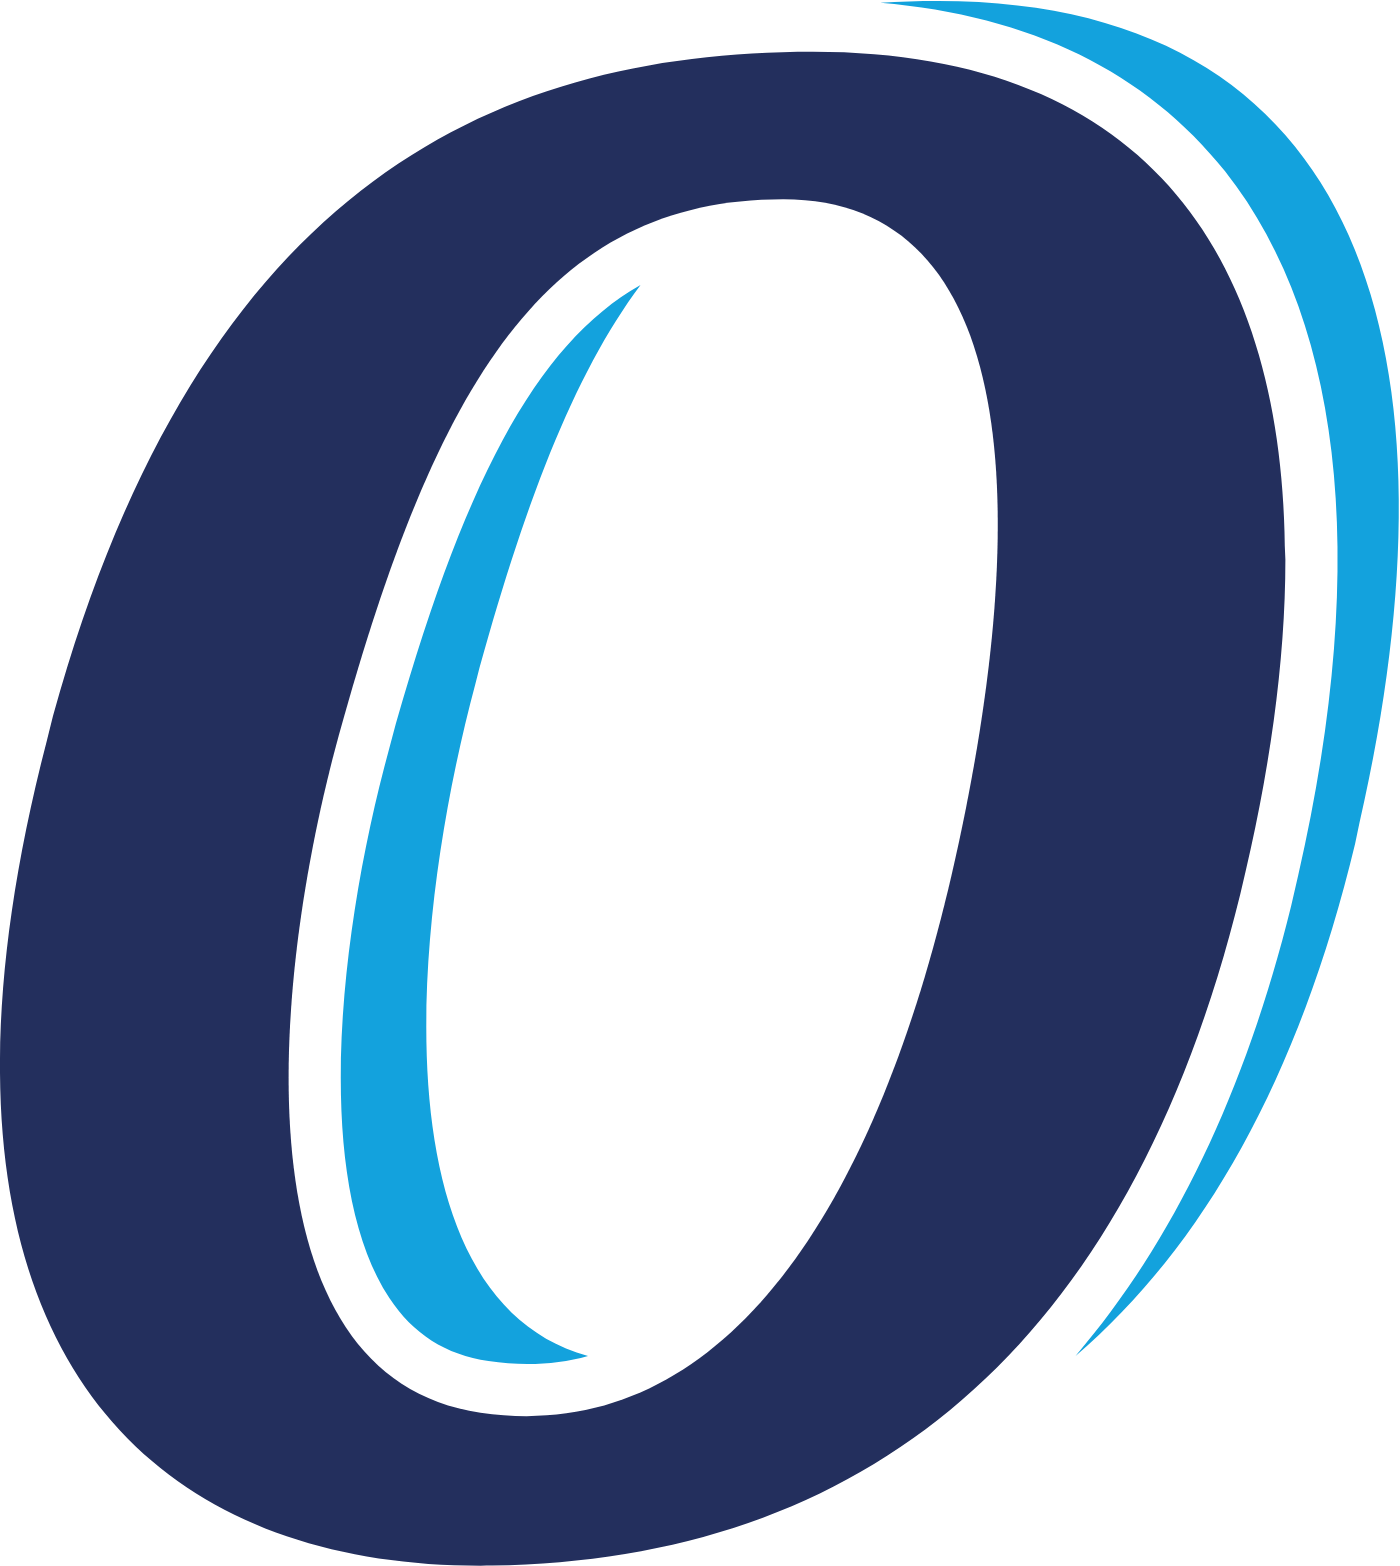 Ontex Group logo (PNG transparent)